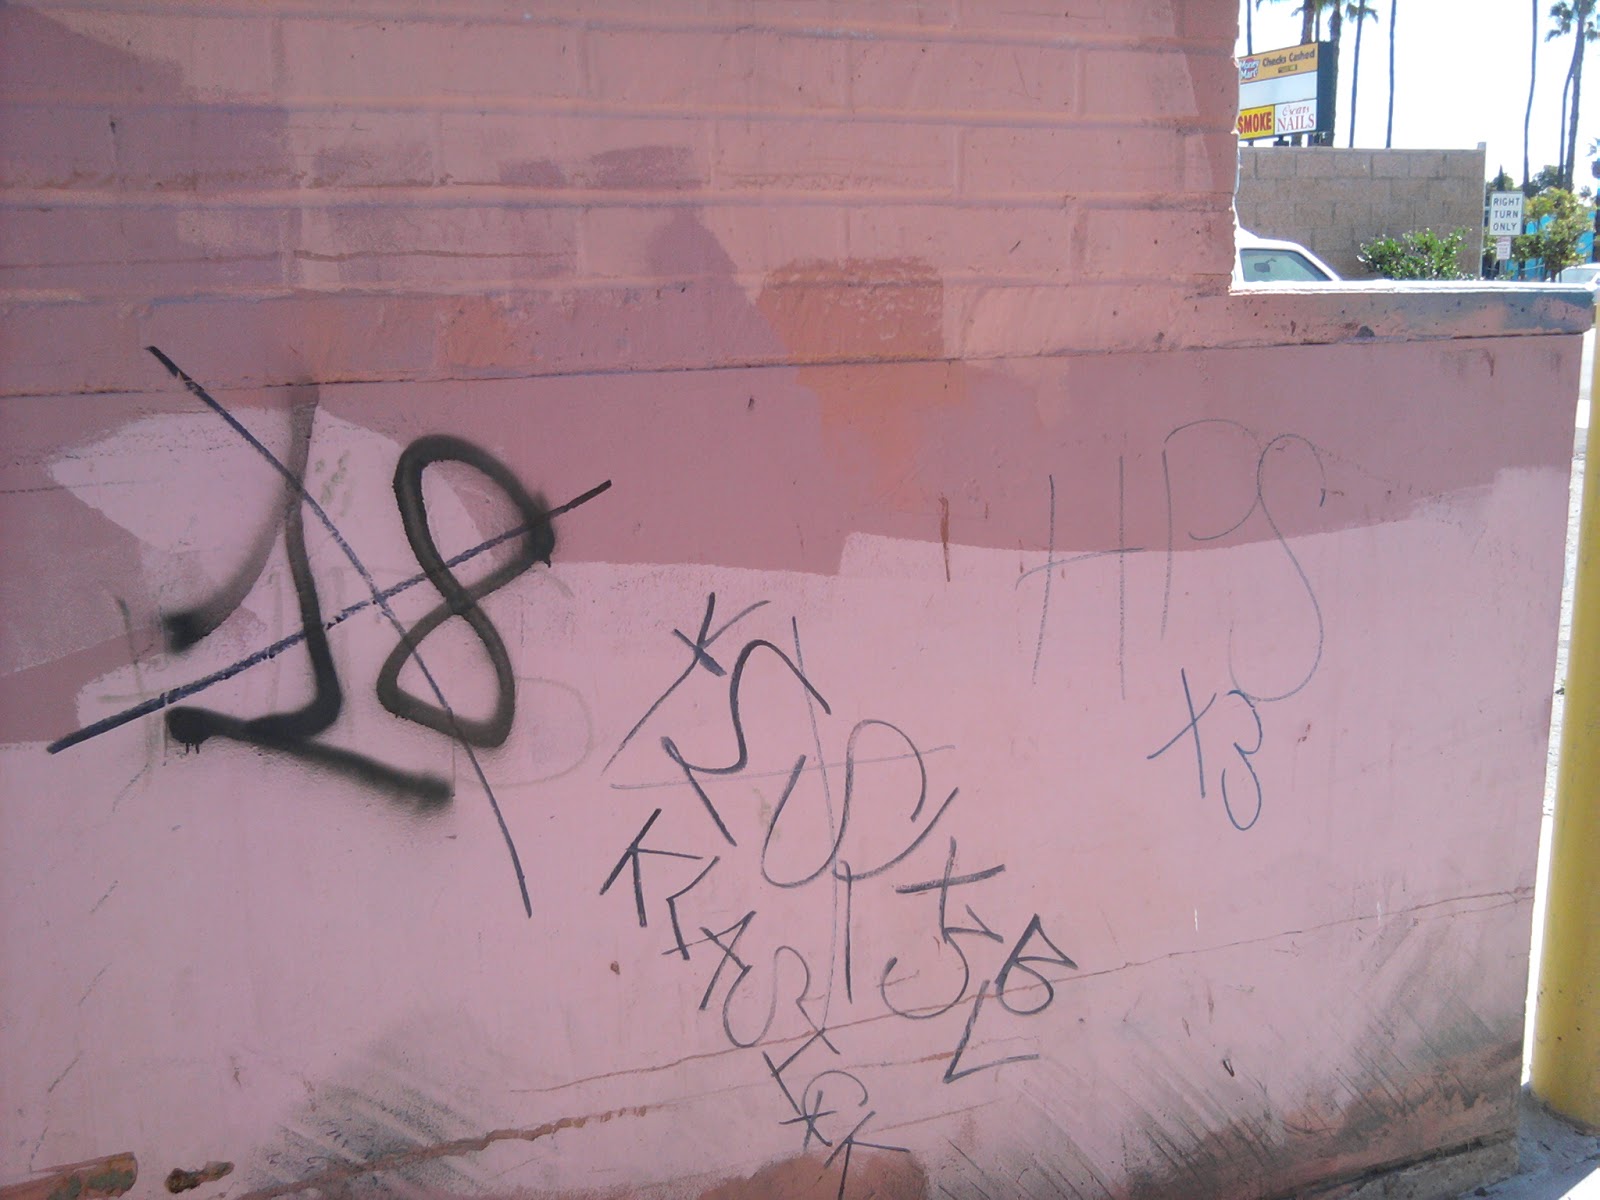 sureno 13 gangs graffiti: East side Longo 13